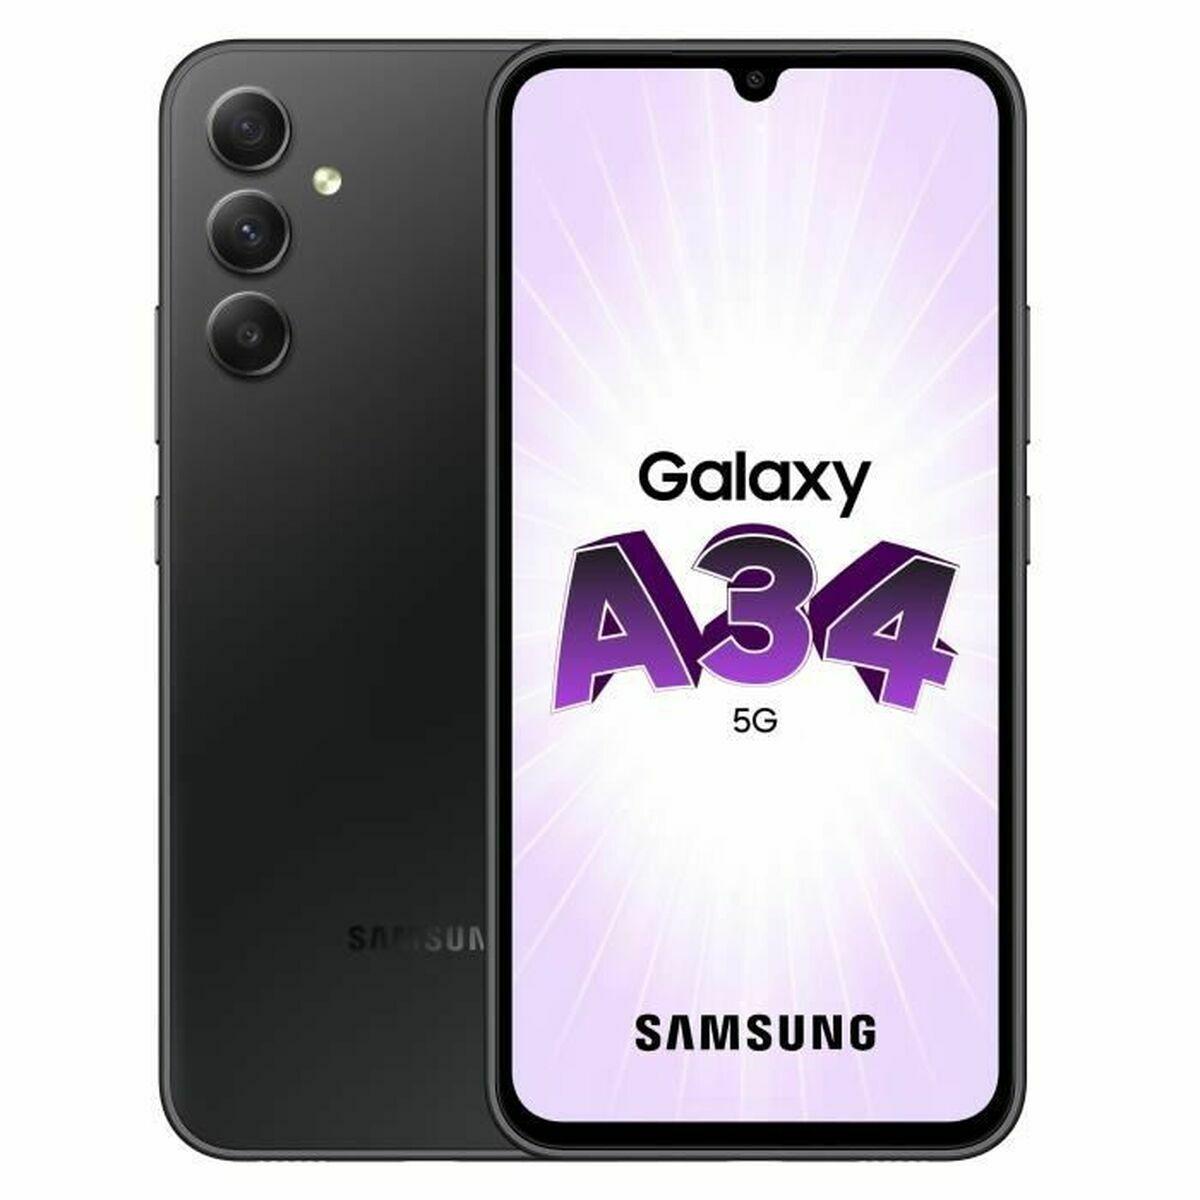 Samsung A34 5G smartphone